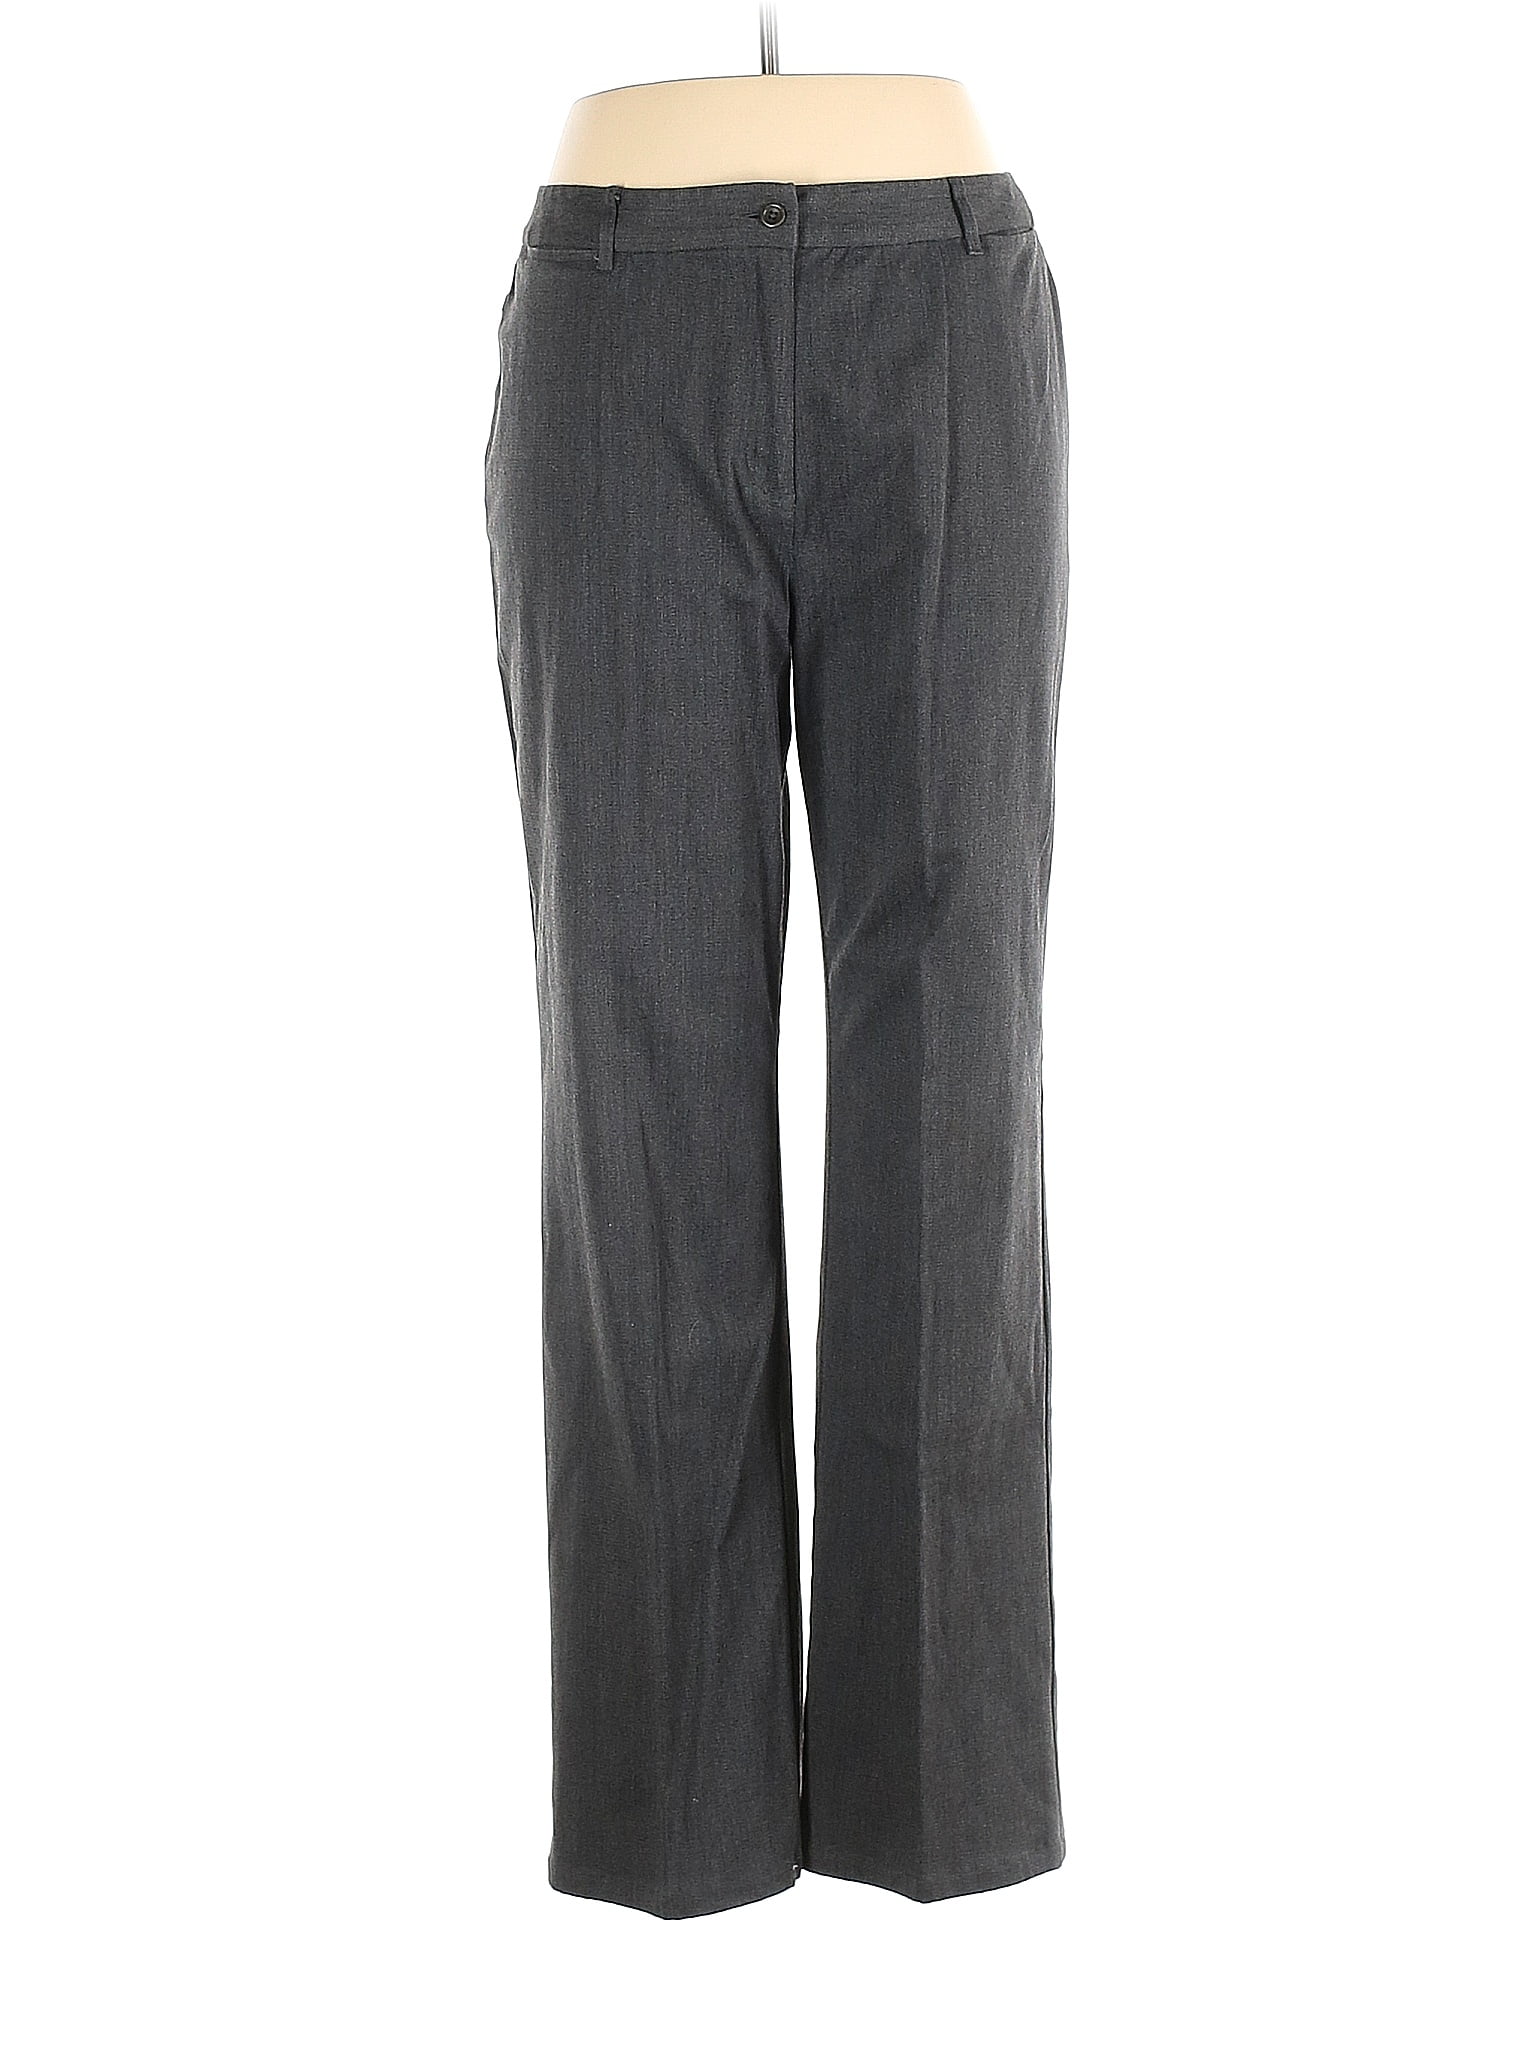 Pendleton Black Gray Casual Pants Size 14 - 74% off | thredUP